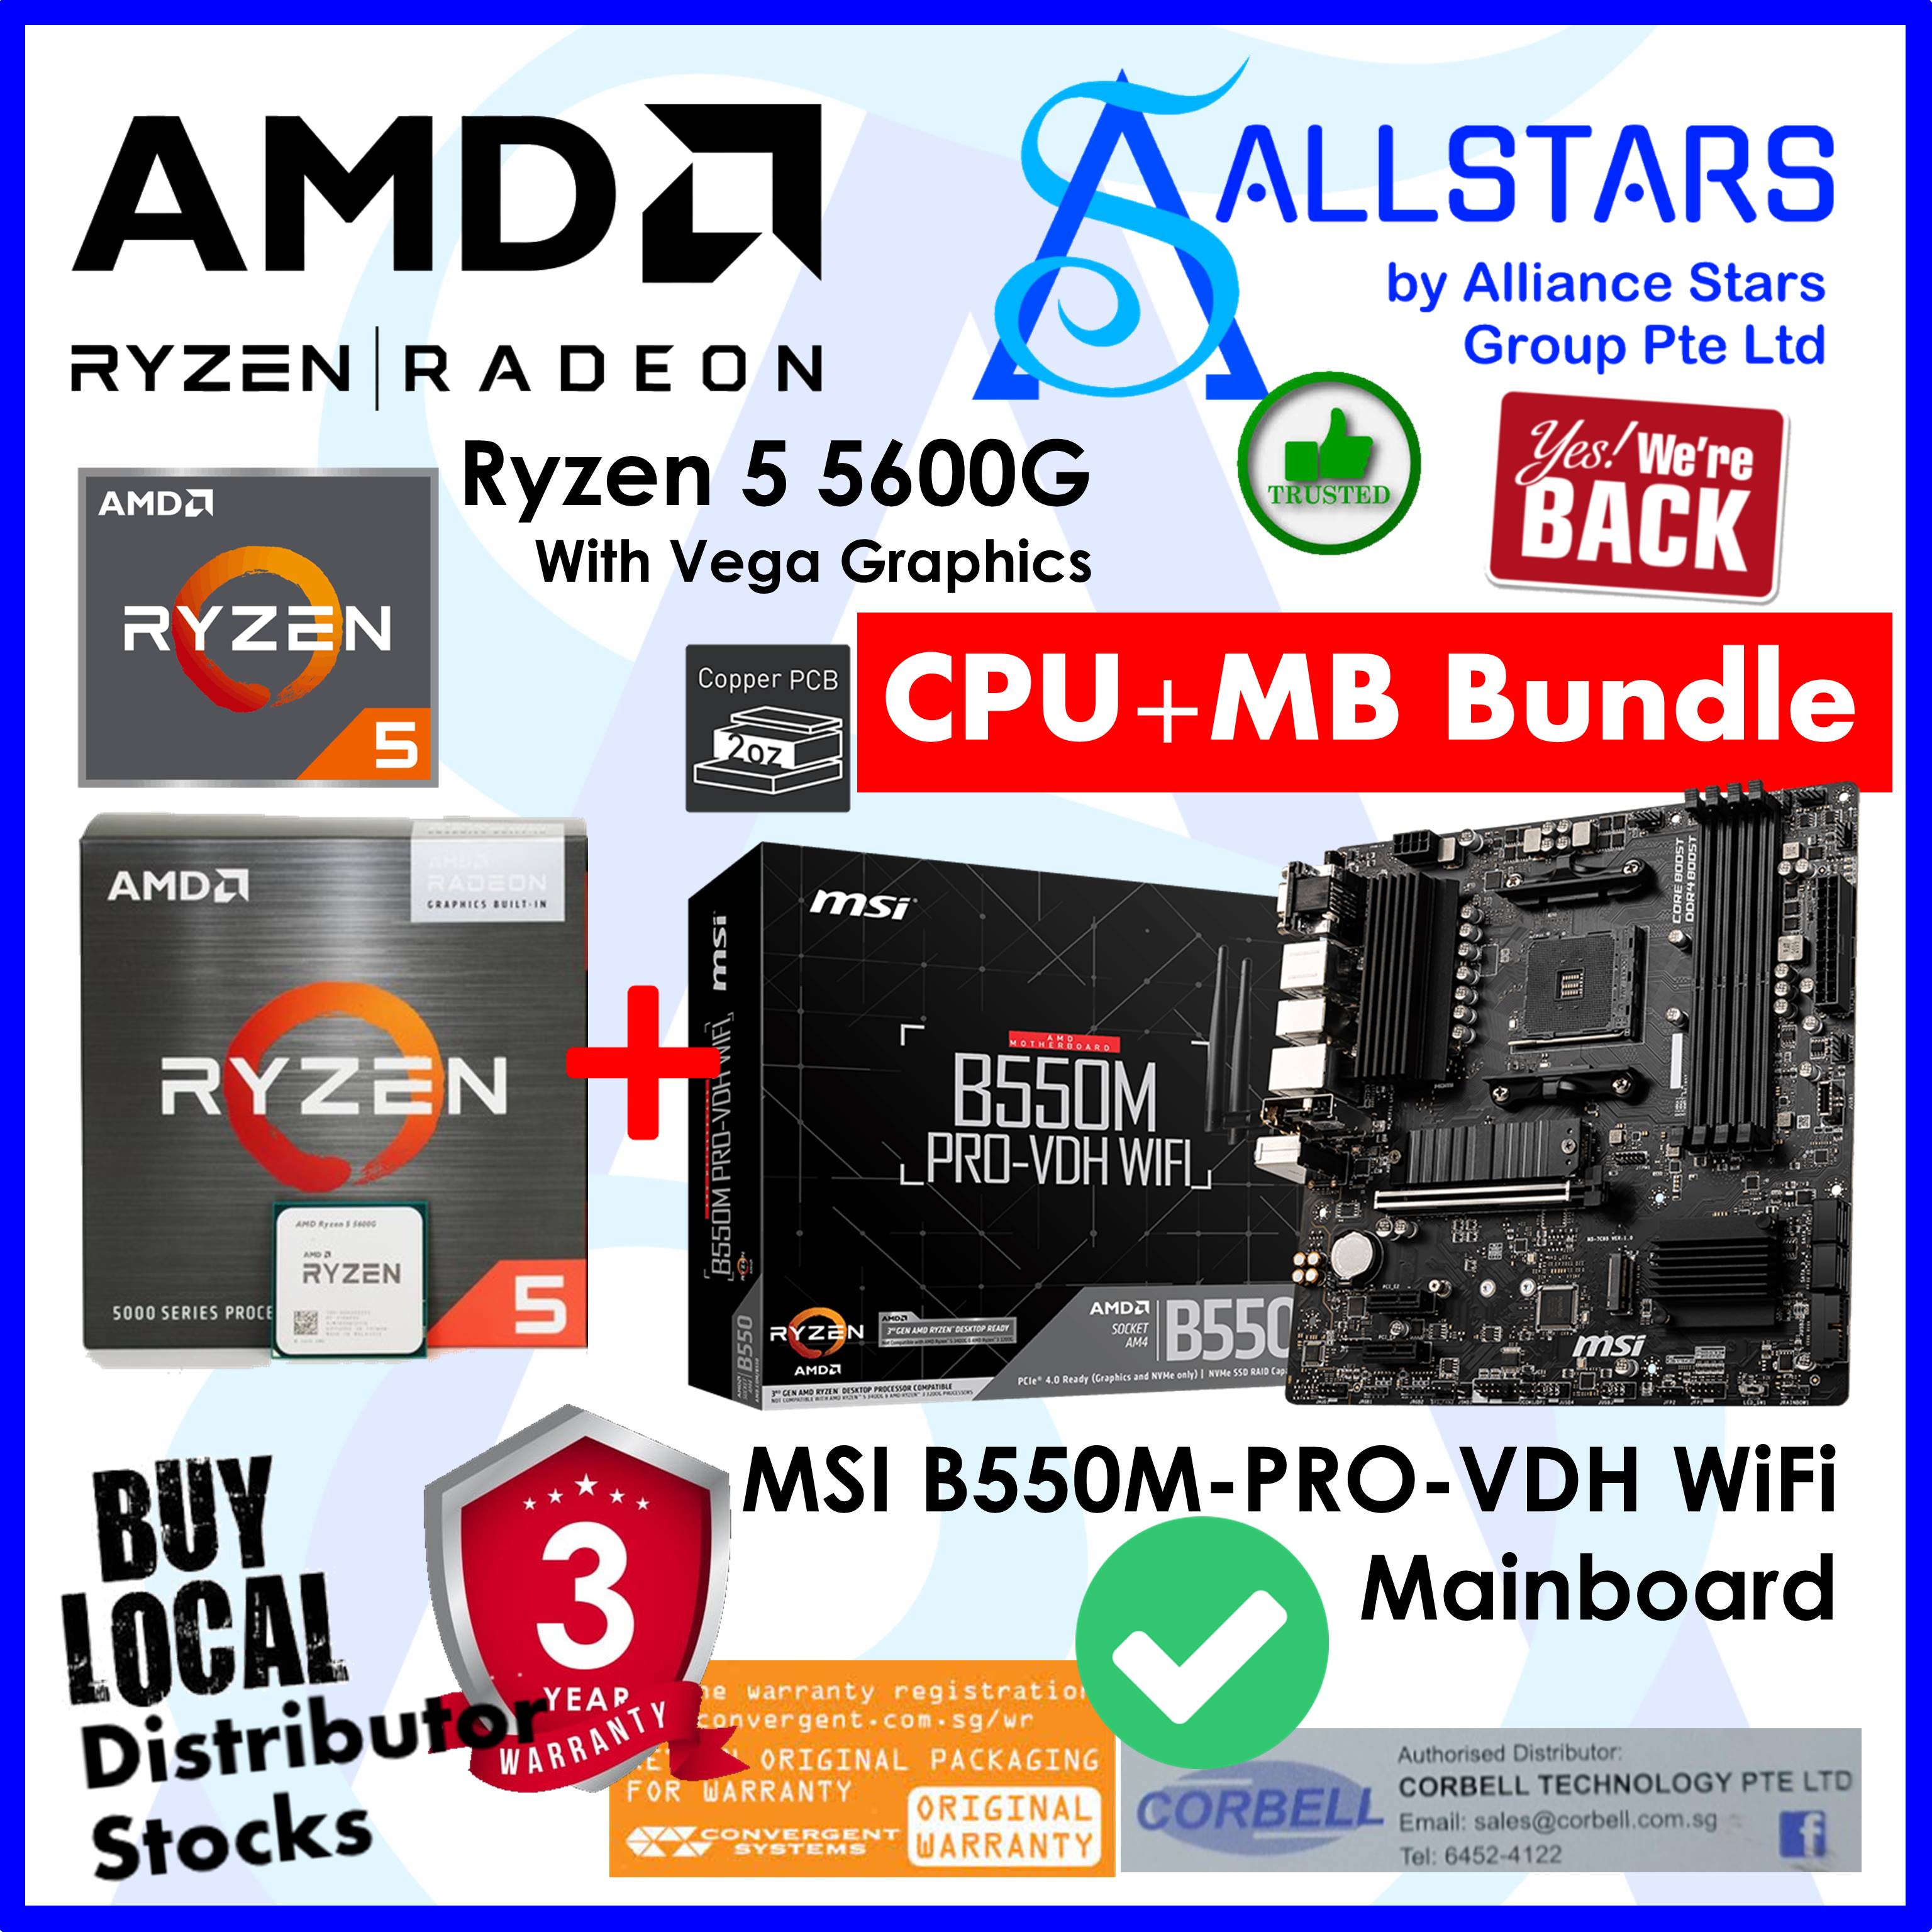 ALLSTARS We are Back DIY CPU+MB Bundle AMD Ryzen 5700G Box  Processor MSI B550M-PRO-VDH WiFi B550M PRO VDH WIFI Mainboard AMD AM4  (Warranty 3years for CPU